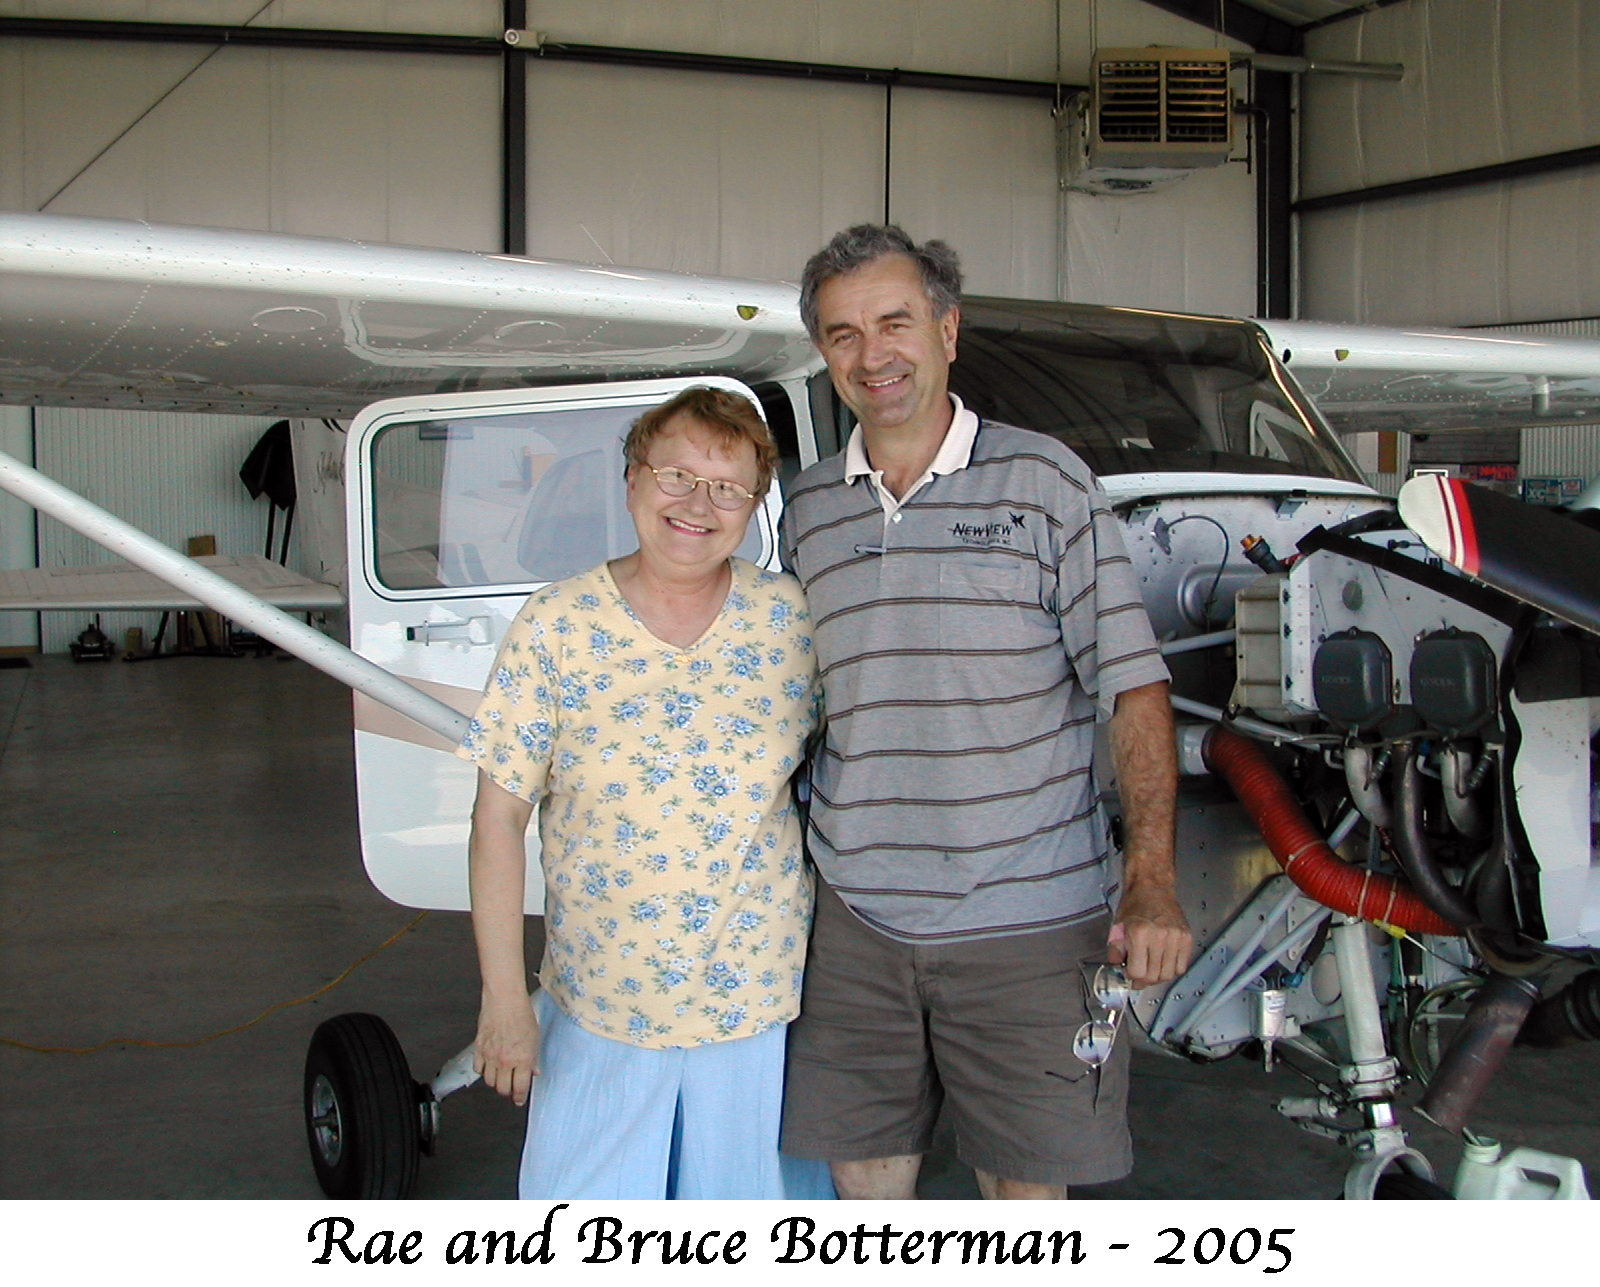 Rae and Bruce Botterman in their airplane repair shop in May 2005